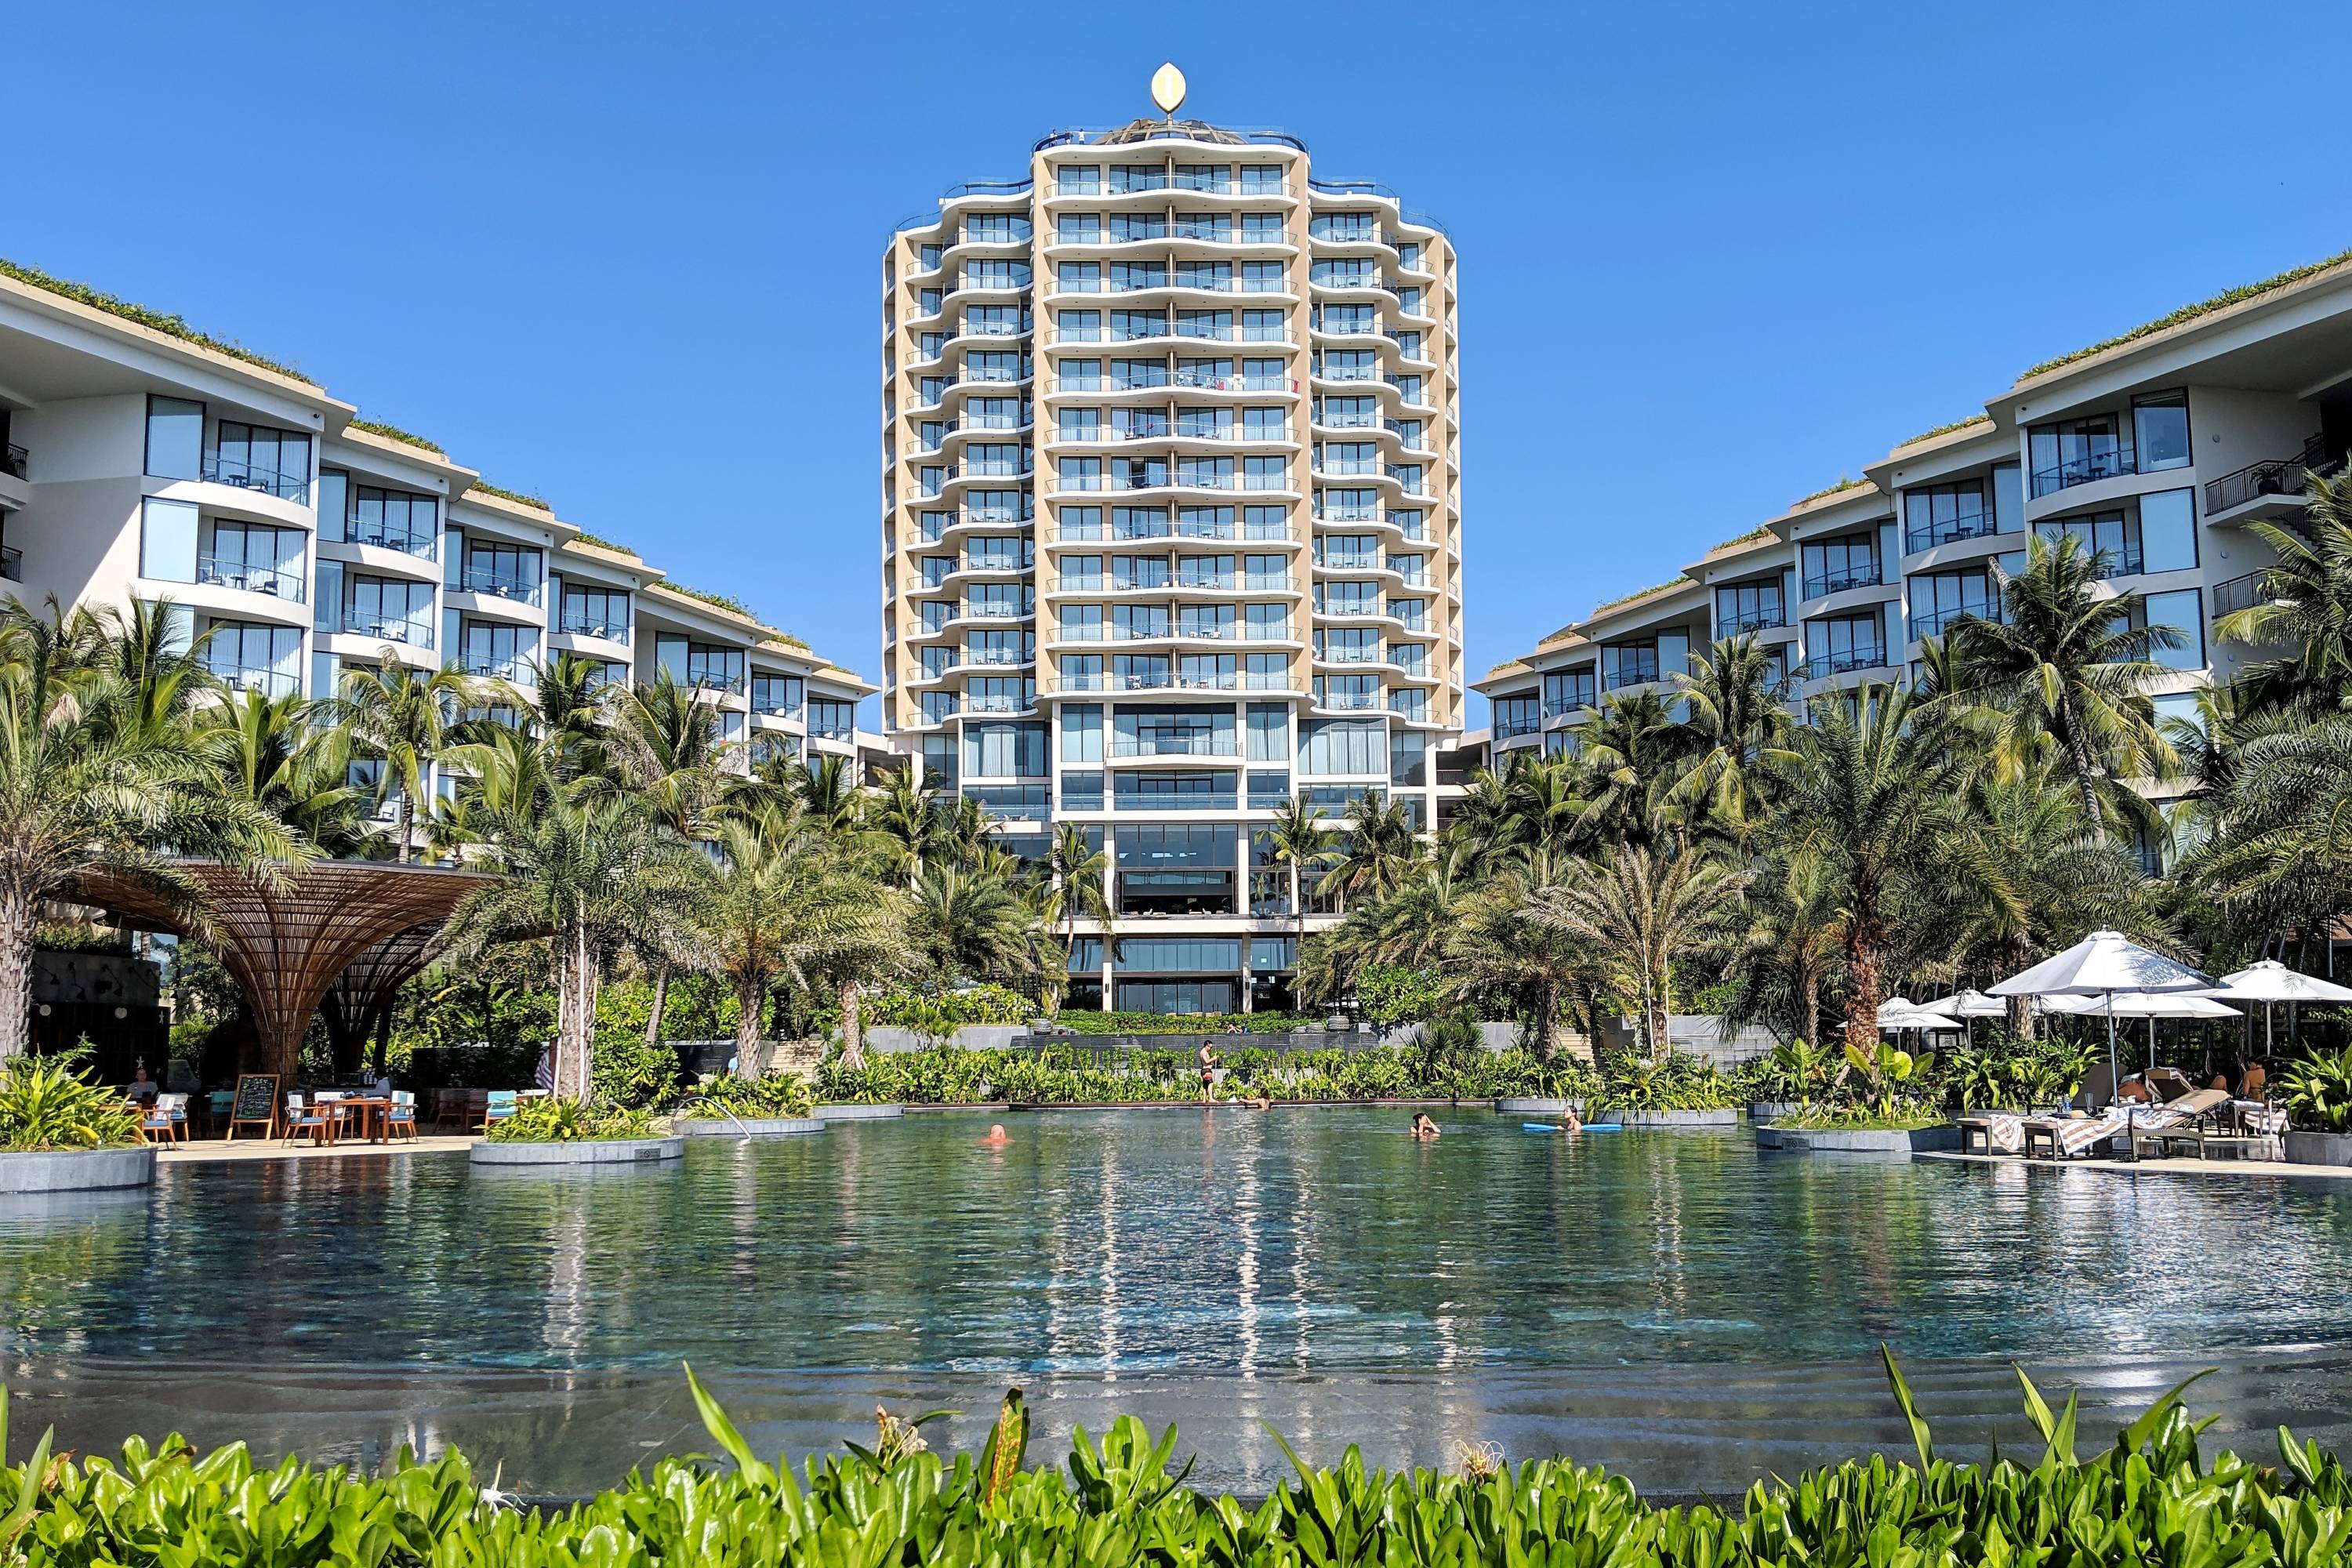 InterContinental Phu Quoc Long Beach Resort in Vietnam